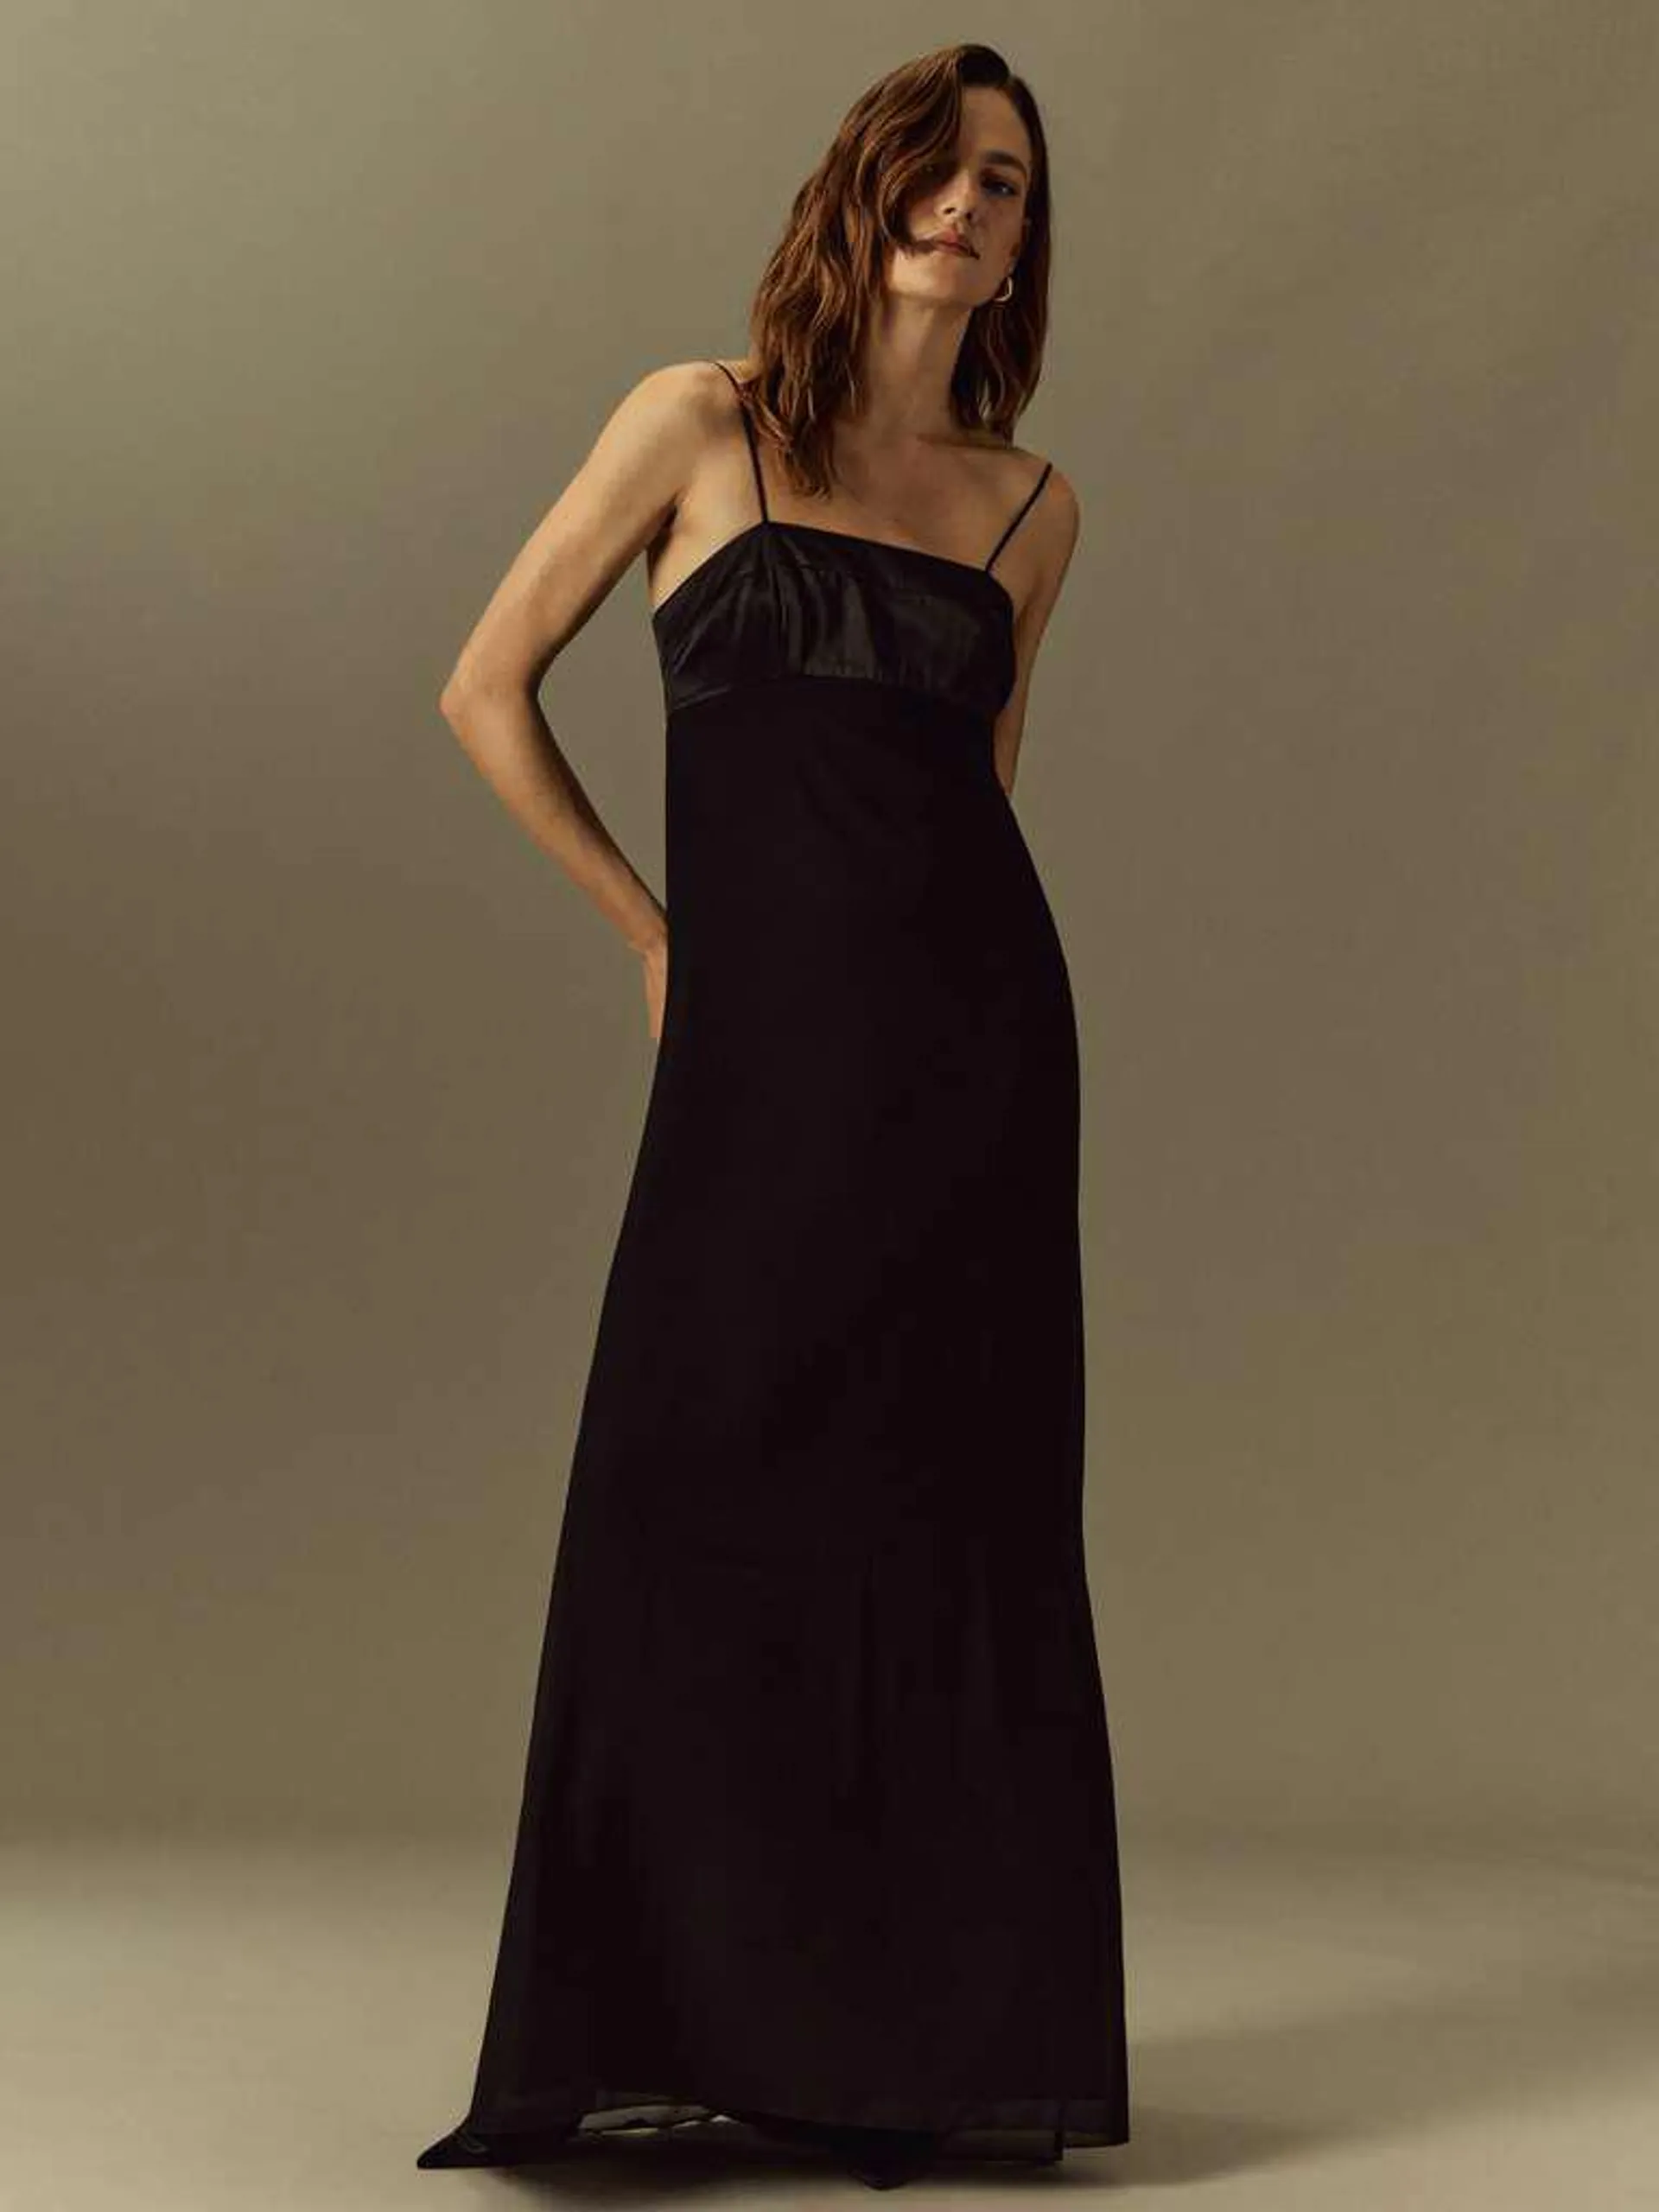 Black Long dress with spaghetti straps.